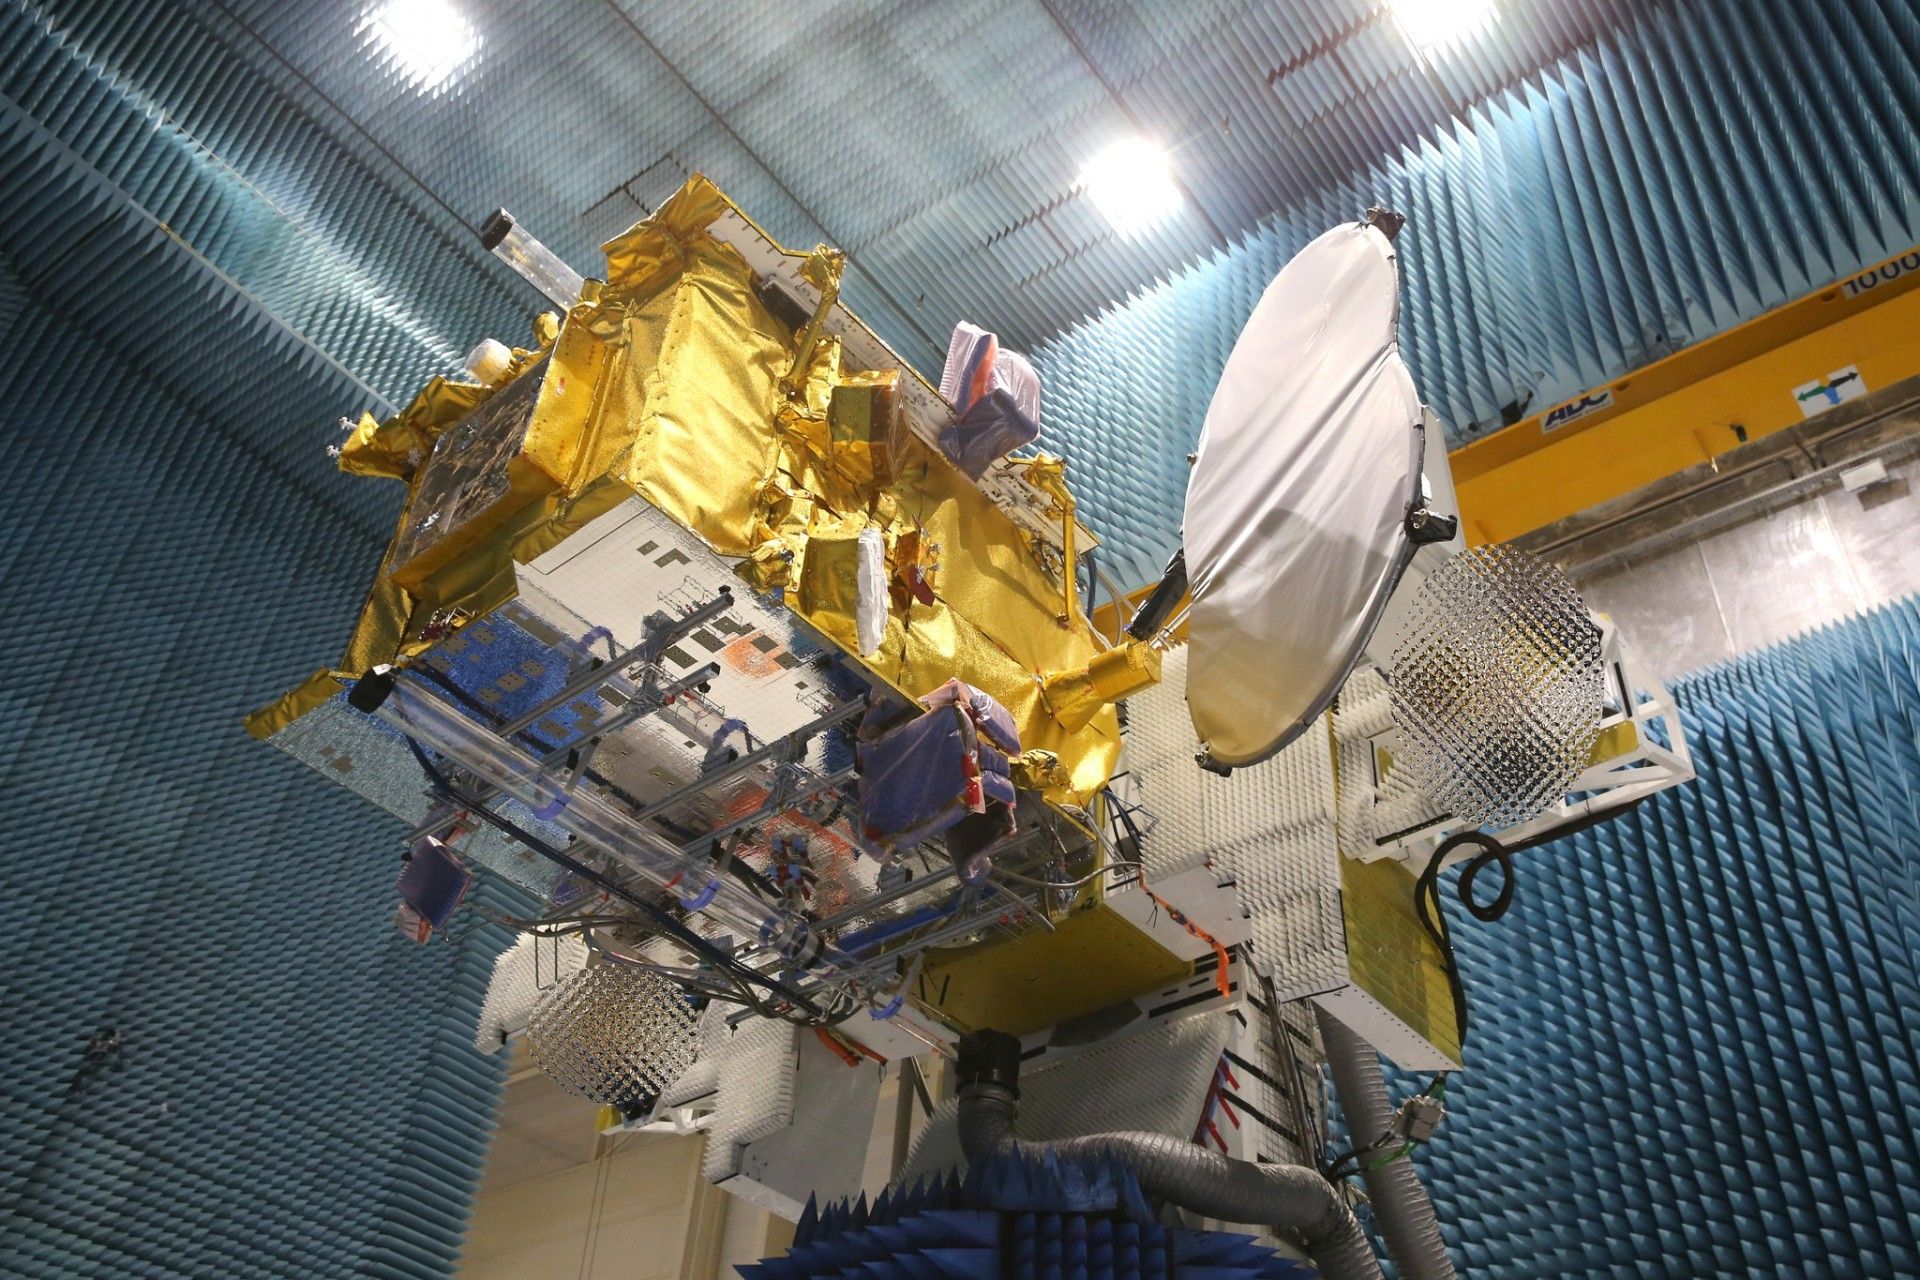 Satelita Eutelsat Quantum podczas testu anteny. Fot. Airbus Defence and Space/Eutelsat via Flickr